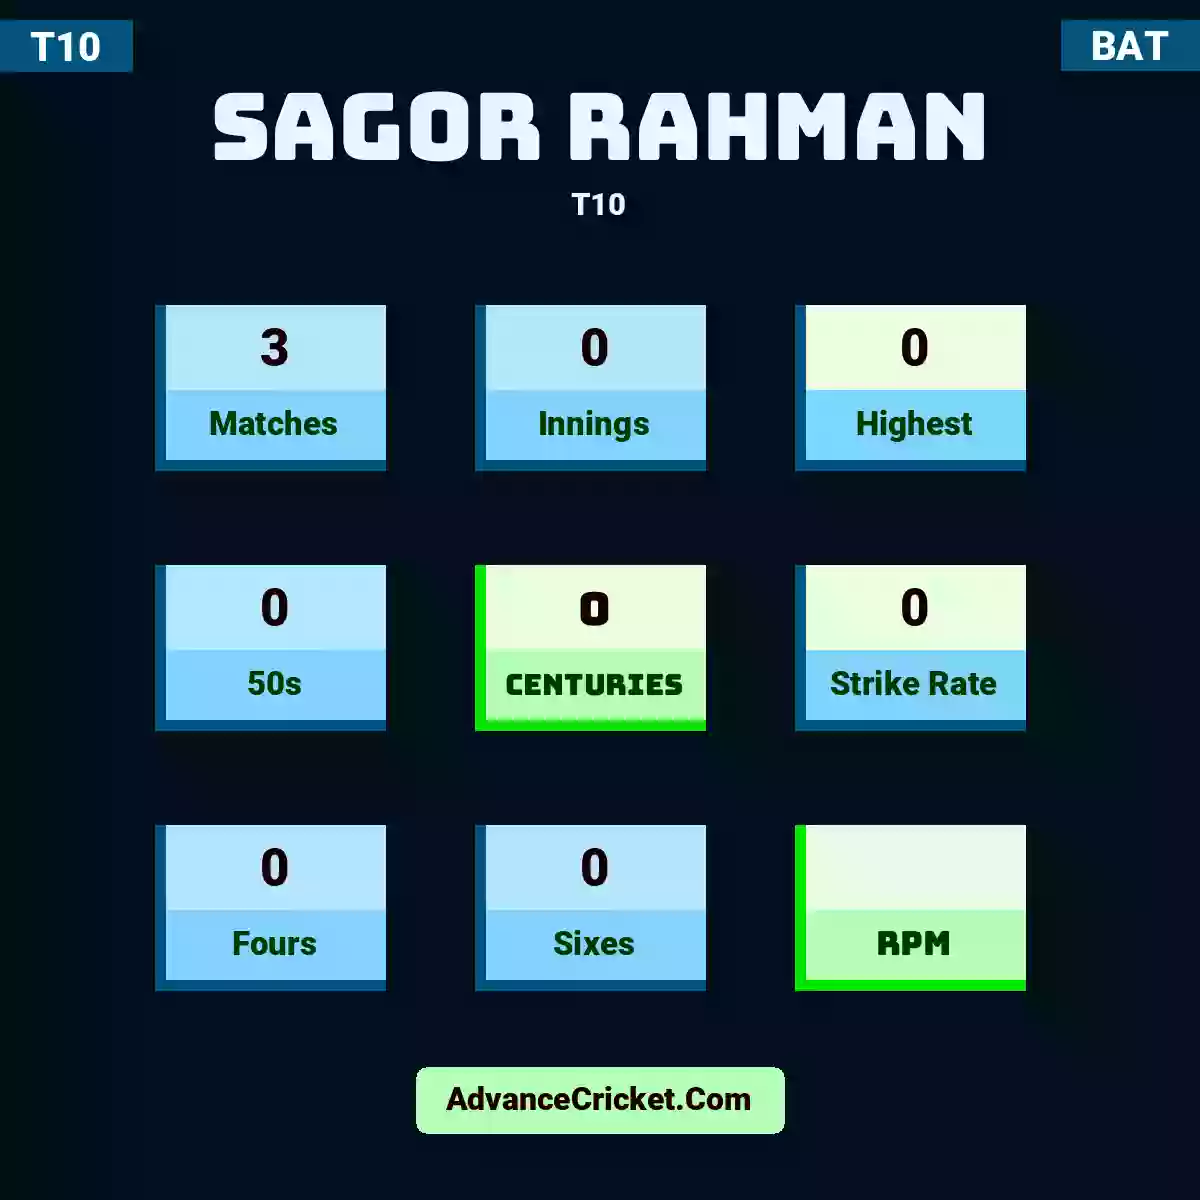 Sagor Rahman T10 , Sagor Rahman played 3 matches, scored 0 runs as highest, 0 half-centuries, and 0 centuries, with a strike rate of 0. S.Rahman hit 0 fours and 0 sixes.